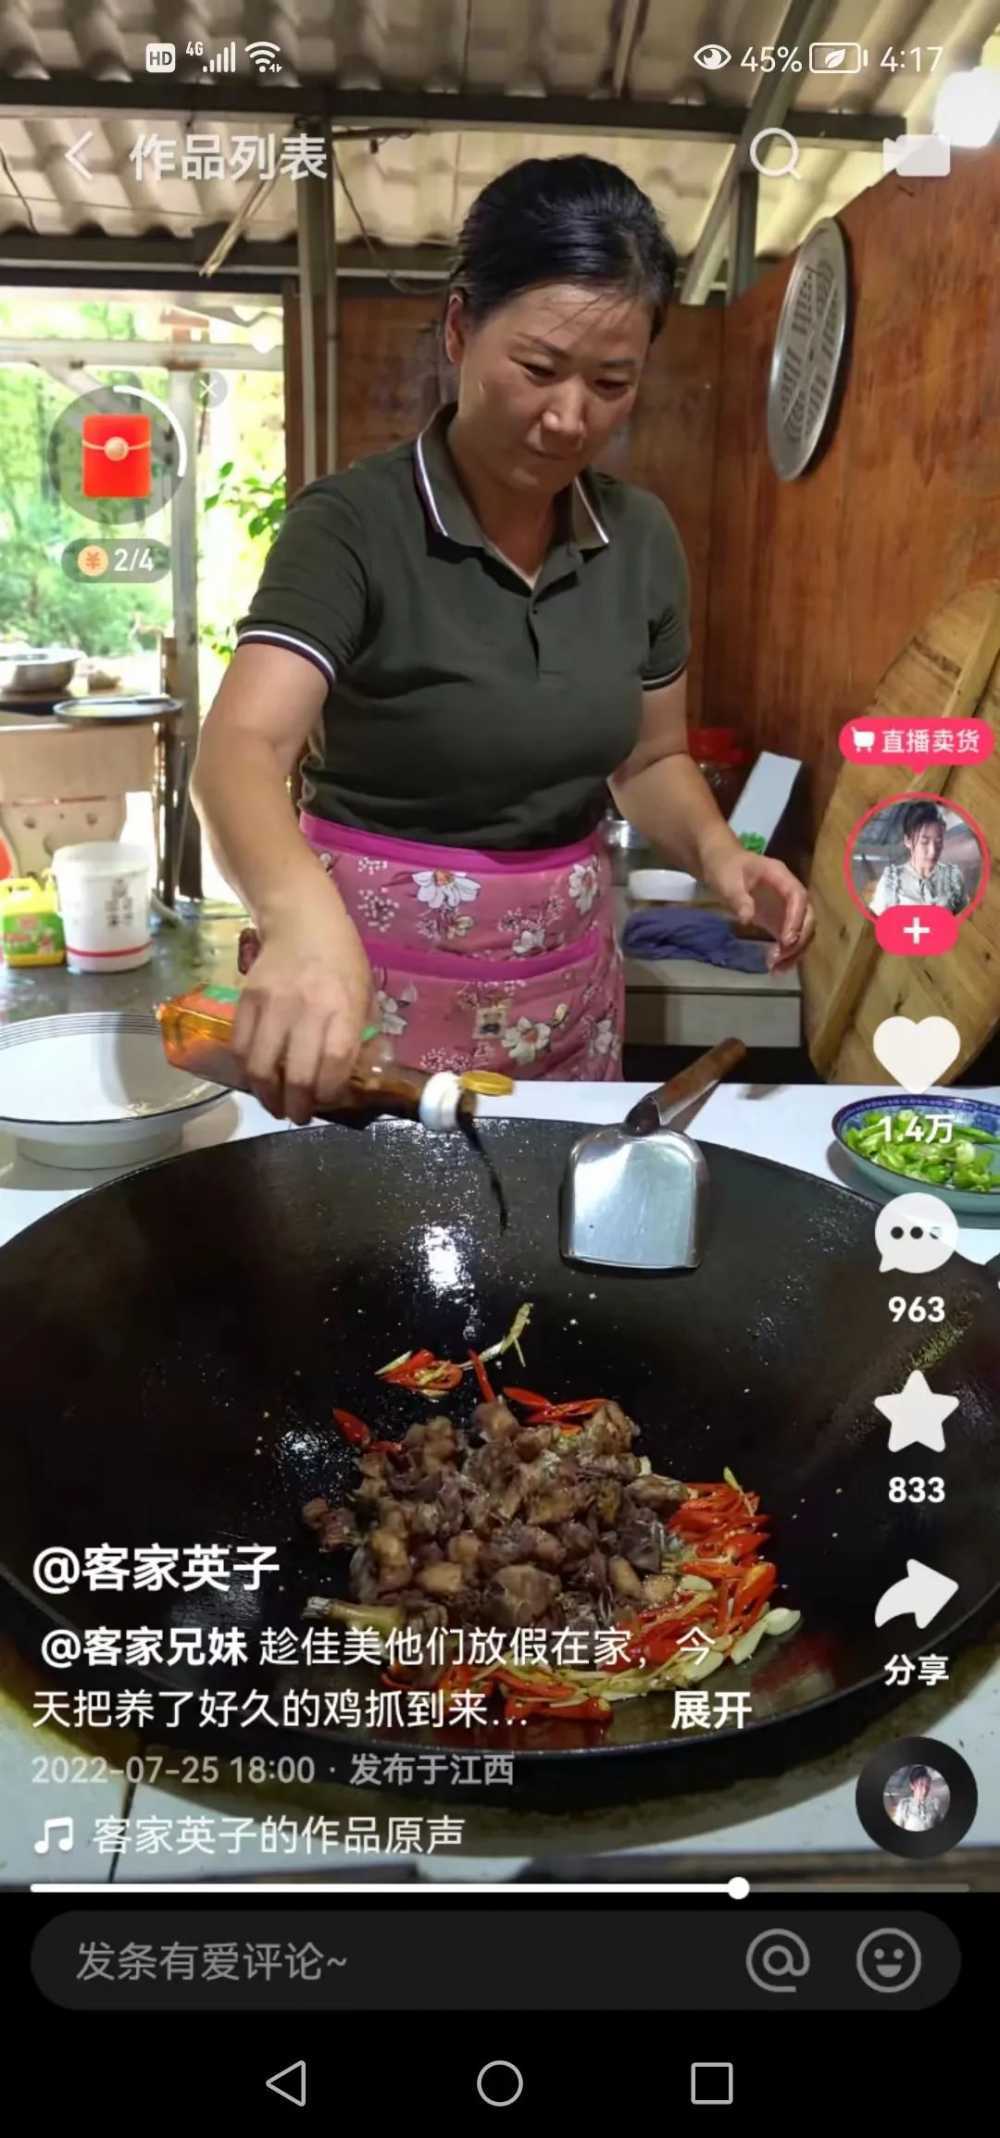 <a href='https://www.zhouxiaohui.cn/duanshipin/
' target='_blank'>短视频</a>美食的尽头竟然是“乡村自制”？-第10张图片-周小辉博客